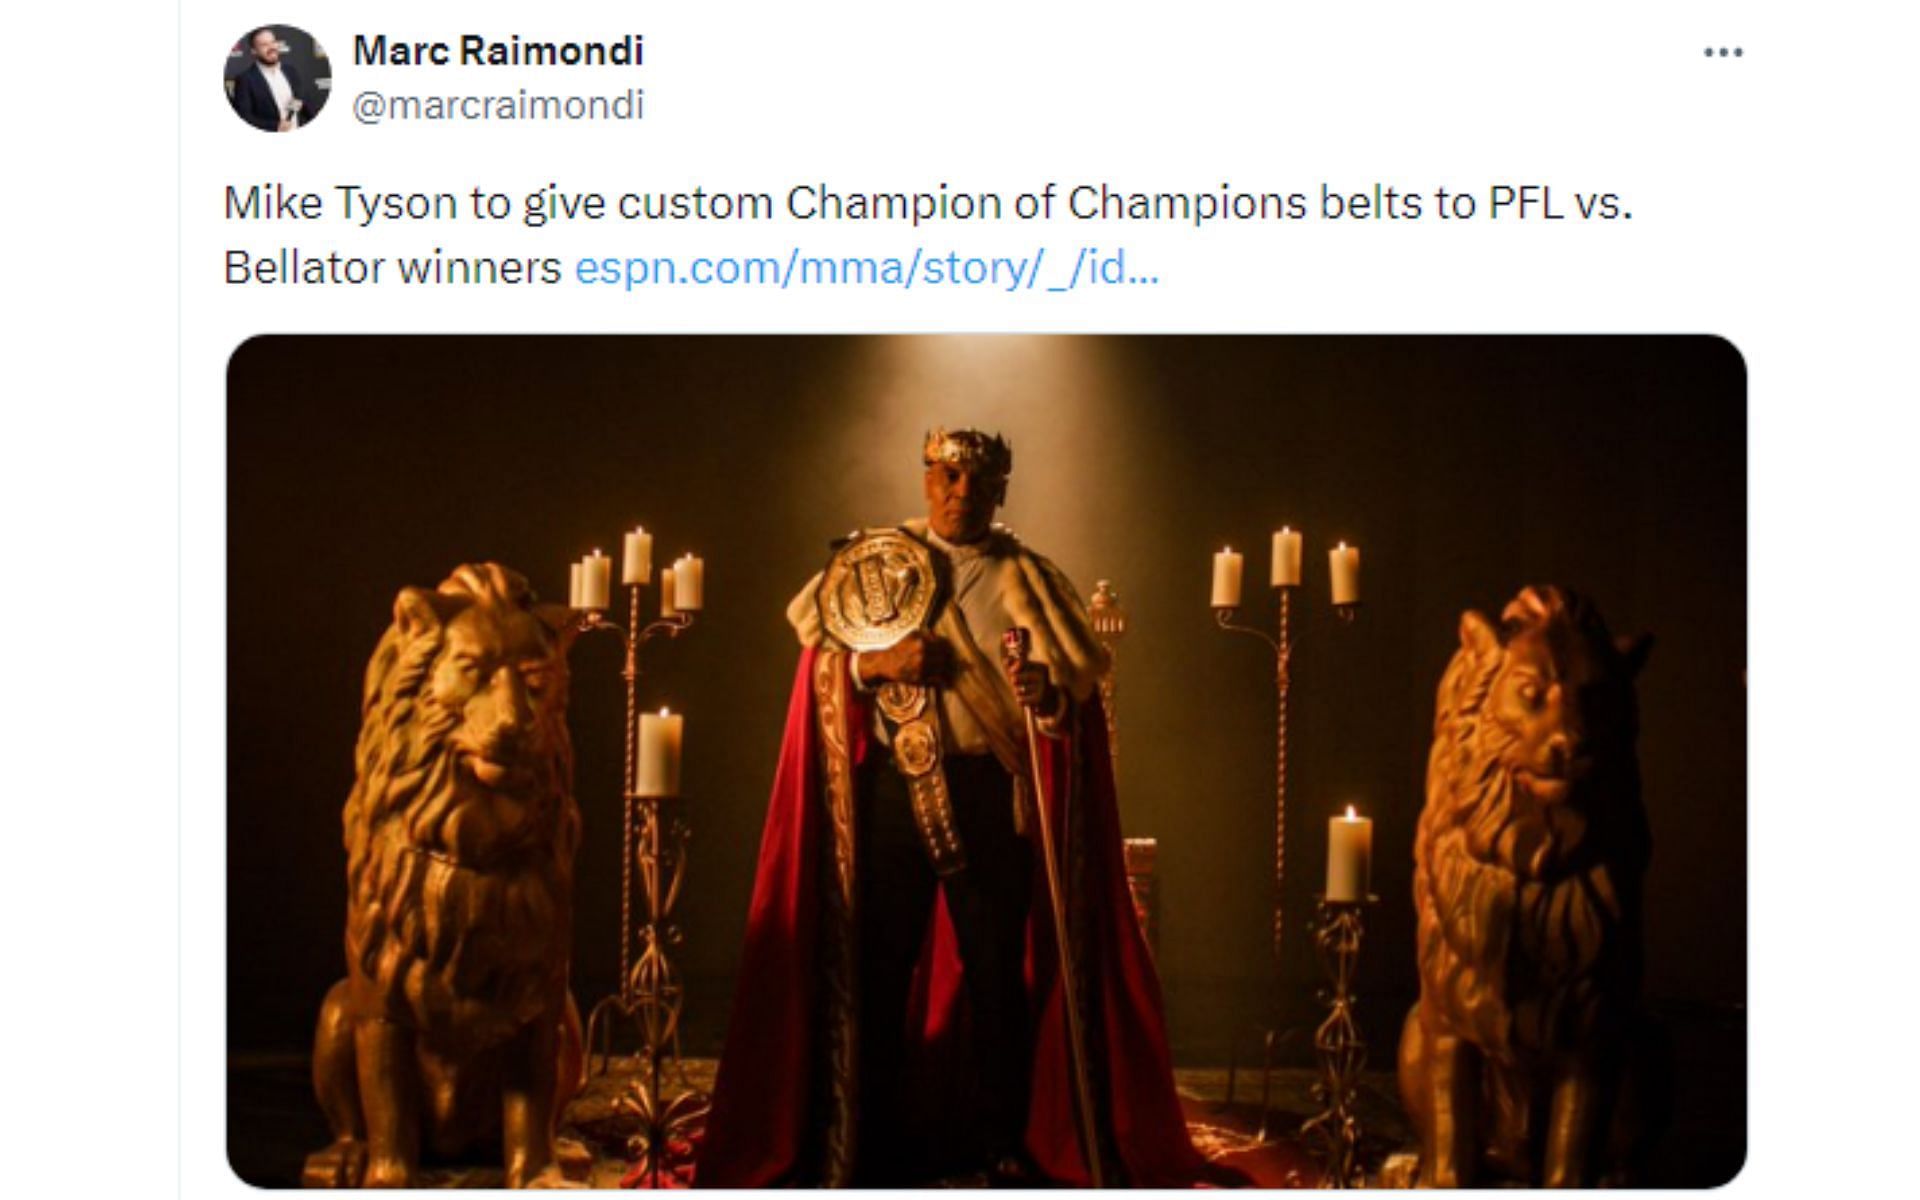 Tweet regarding Tyson awarding champion vs. champion titles [Image courtesy: @marcraimondi - X]